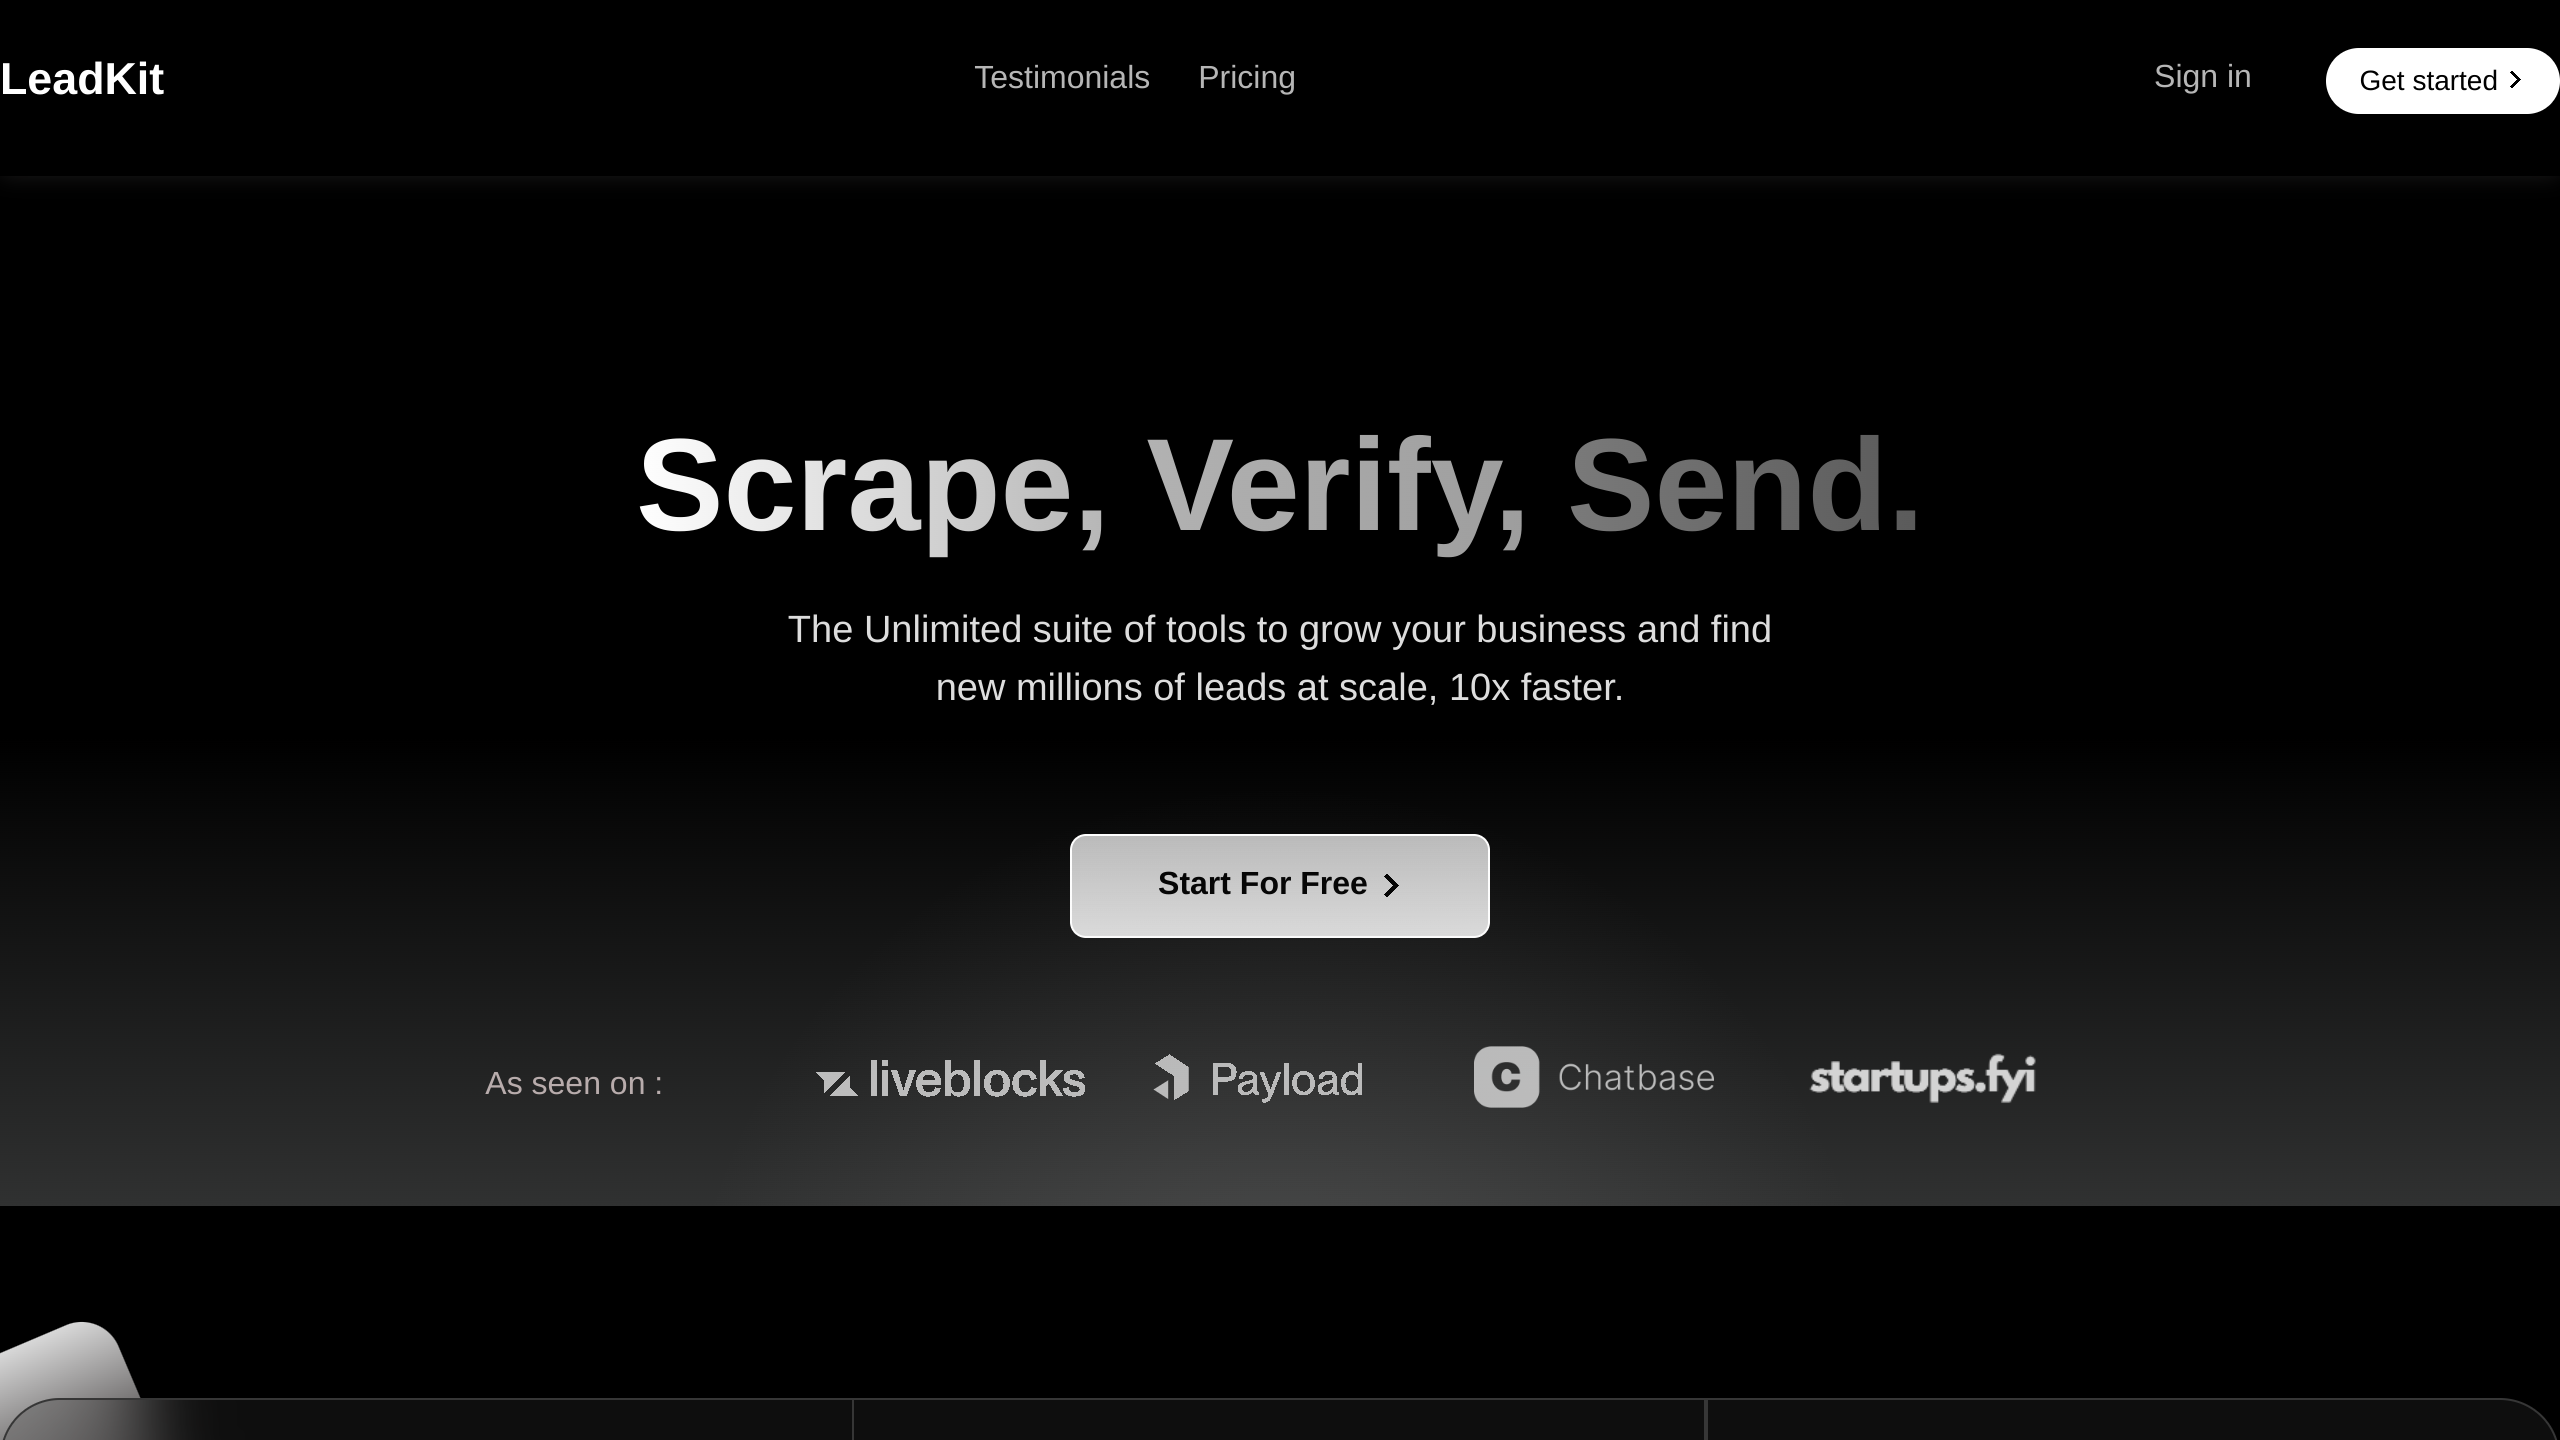 LeadKit's website screenshot